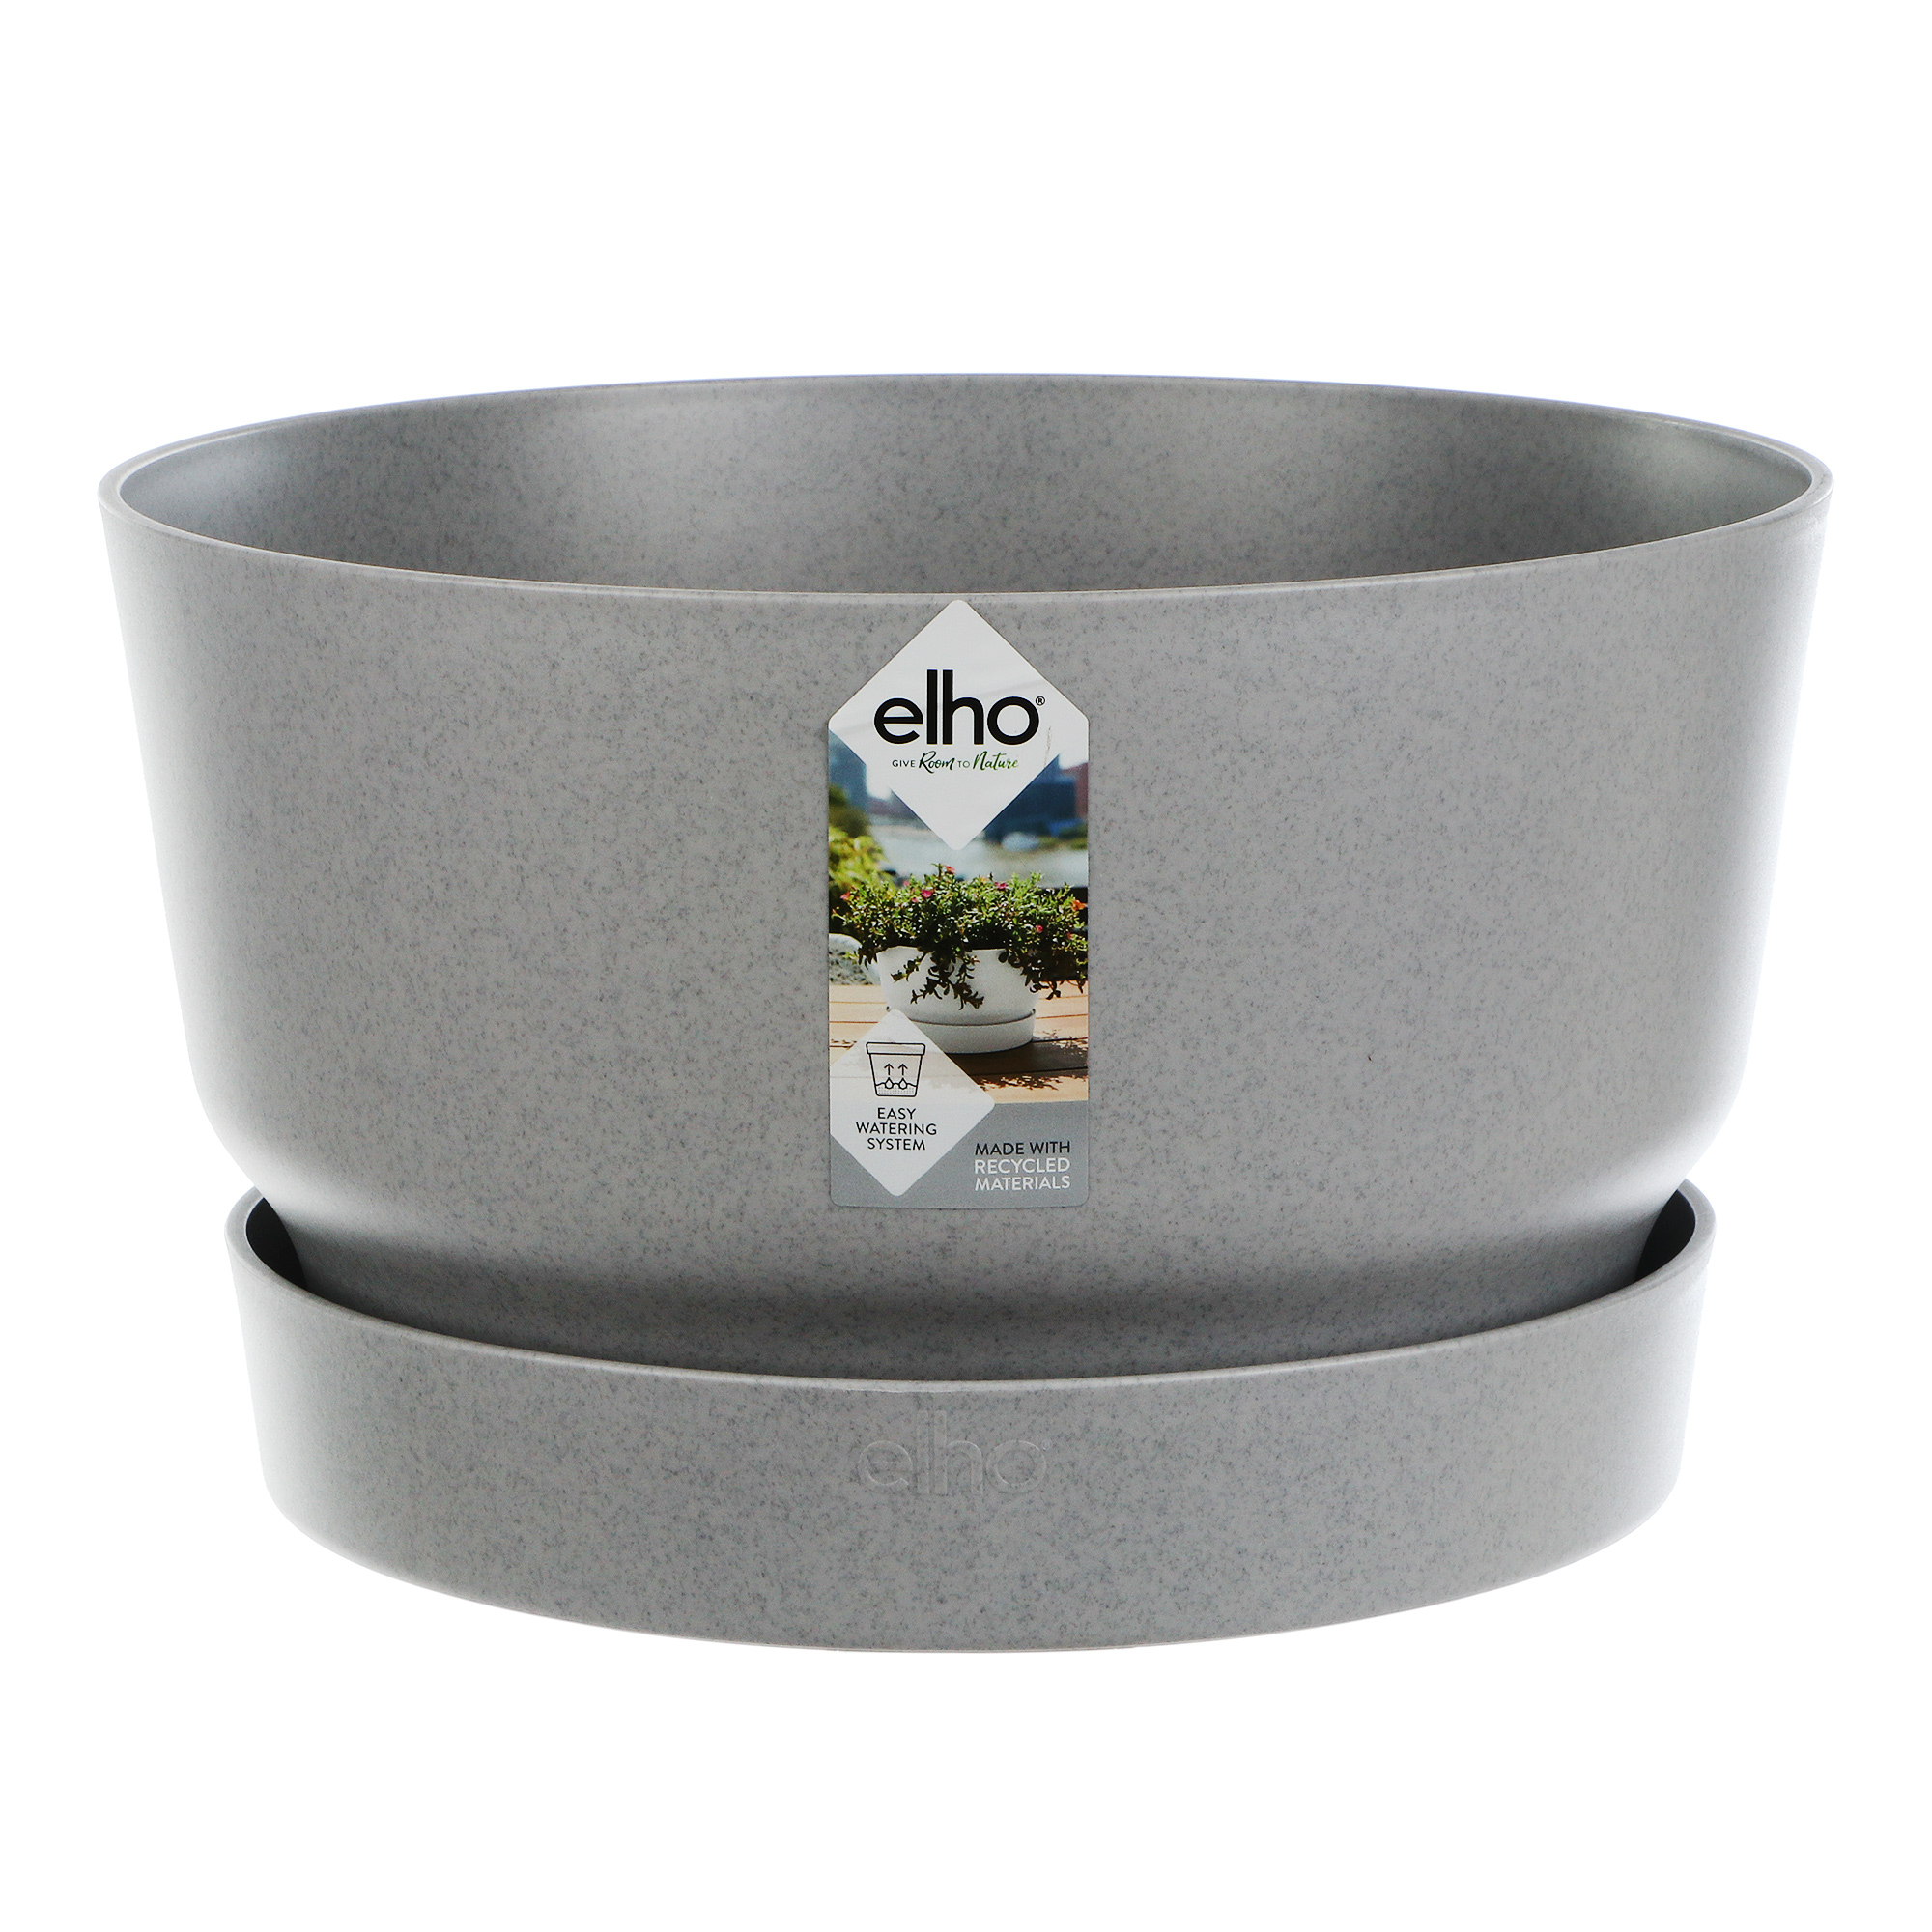 Кашпо Elho greenville bowl д33см серое, цвет серый - фото 1